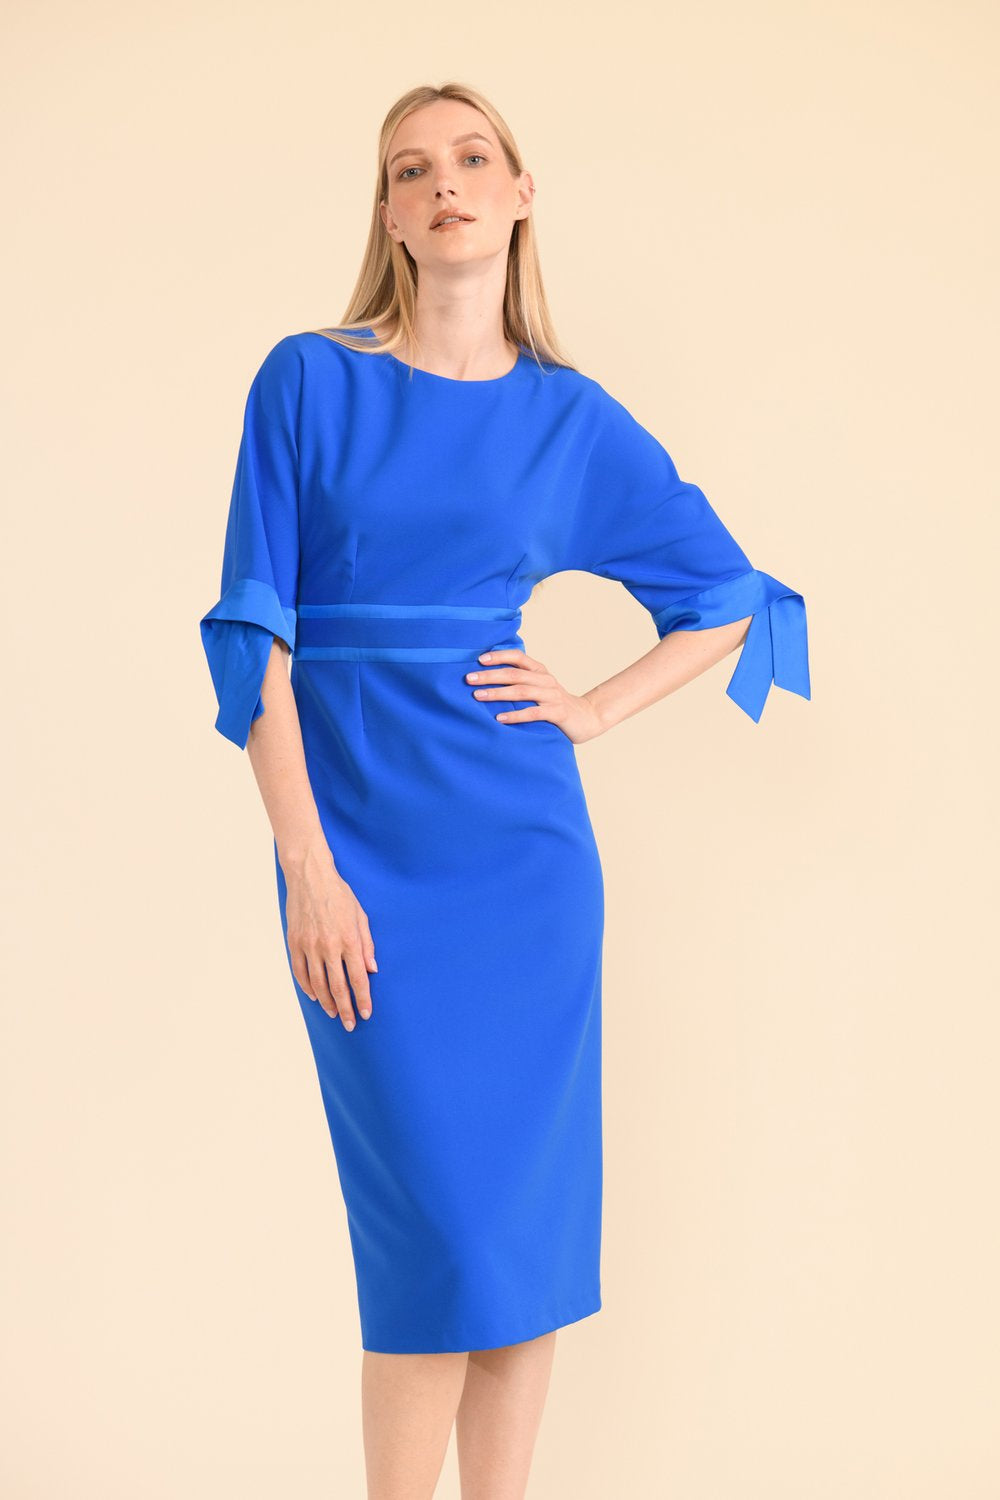 Caroline Kikenny Aria Blue Dress